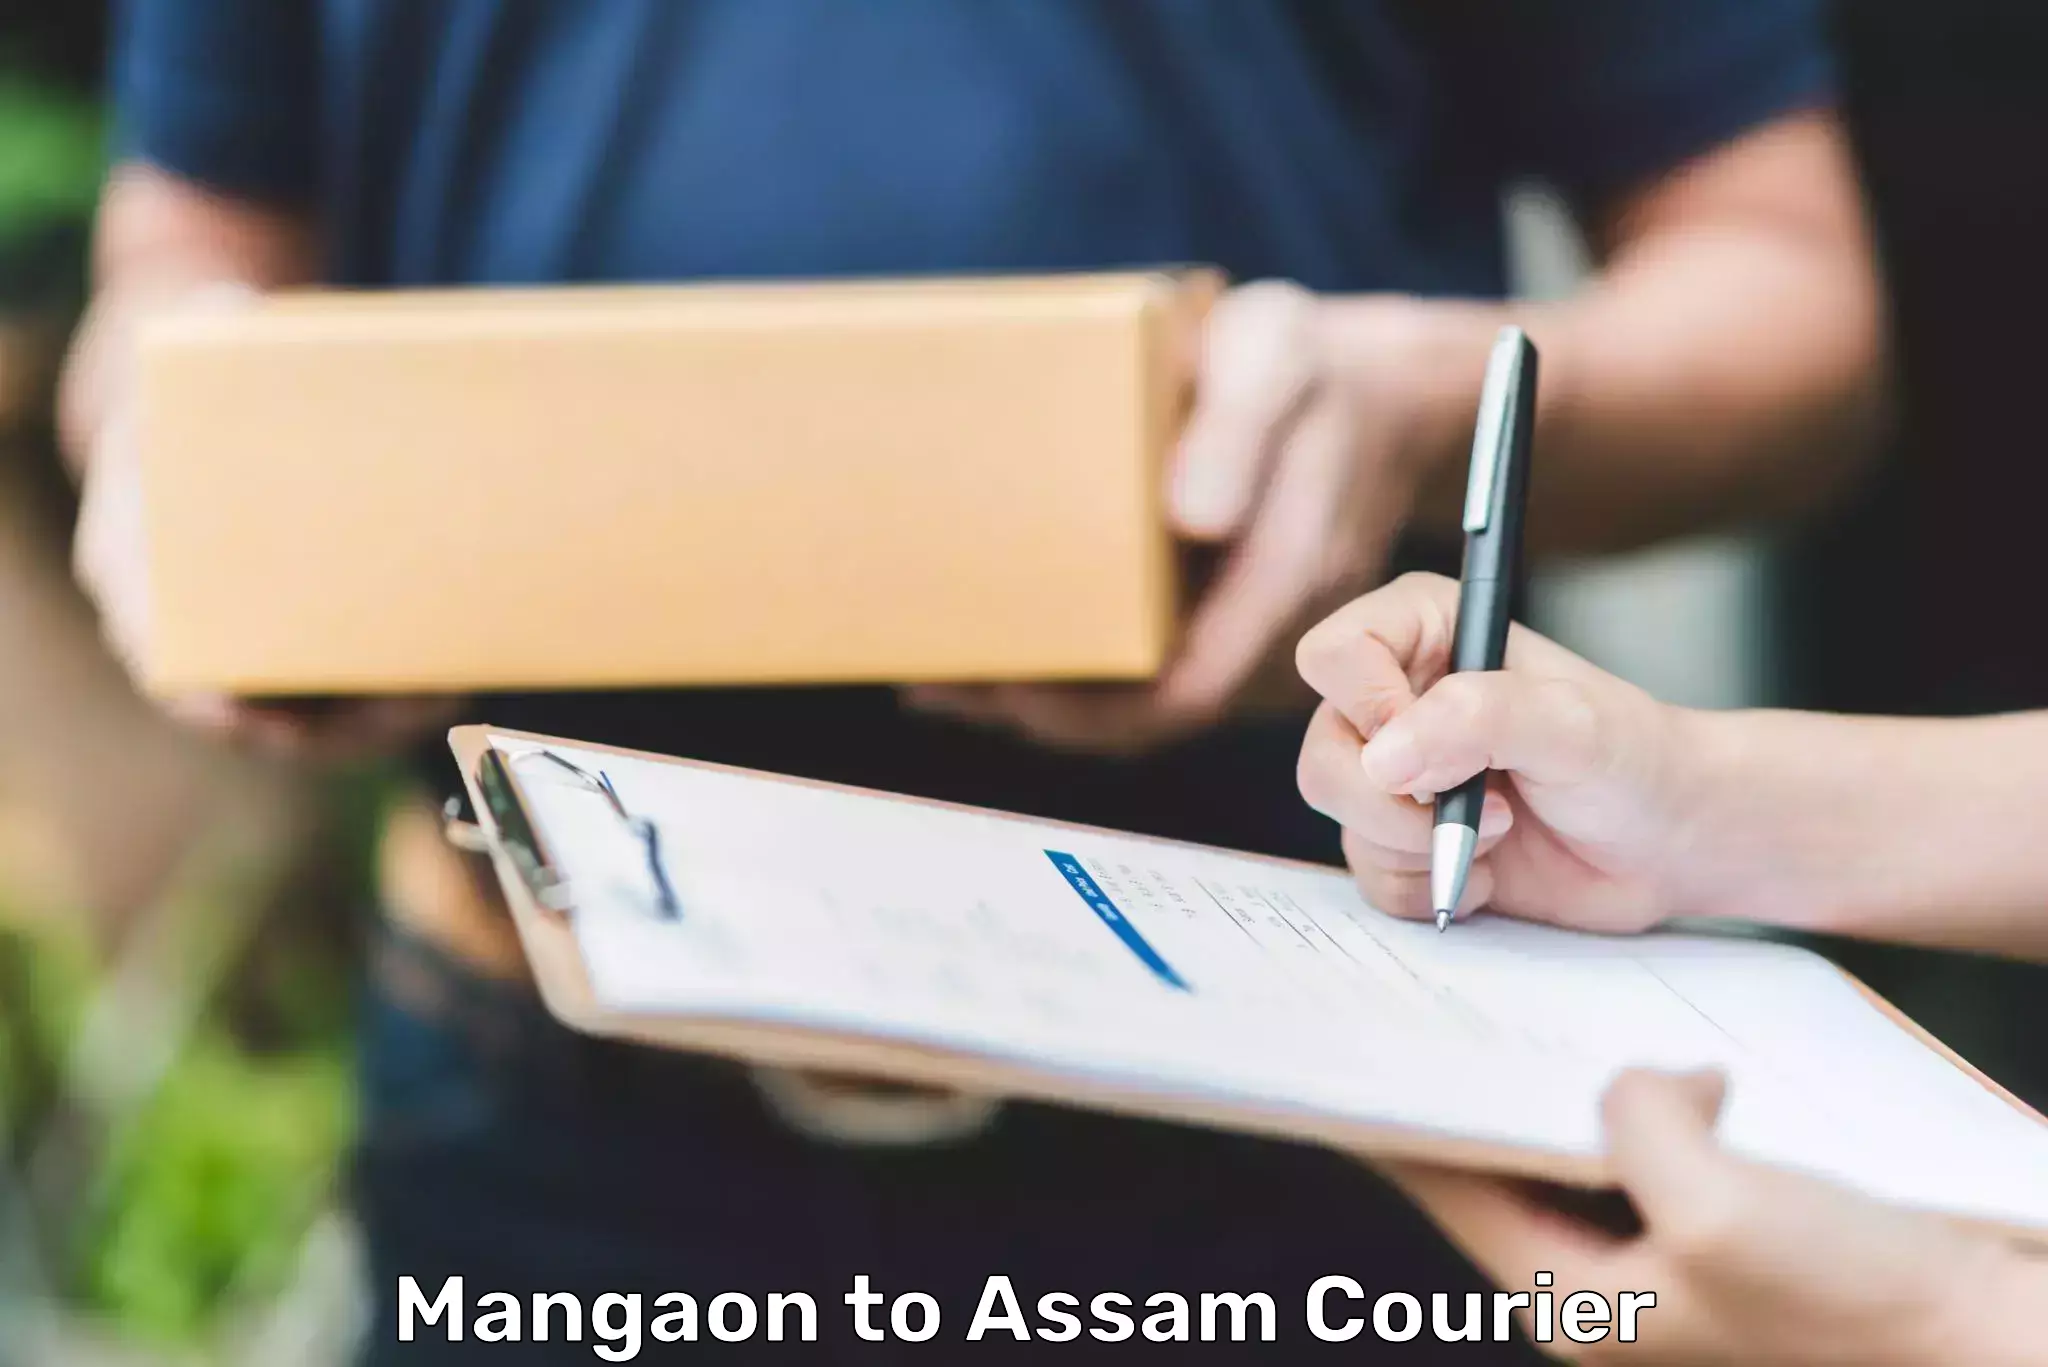 Cross-border shipping Mangaon to Lala Assam